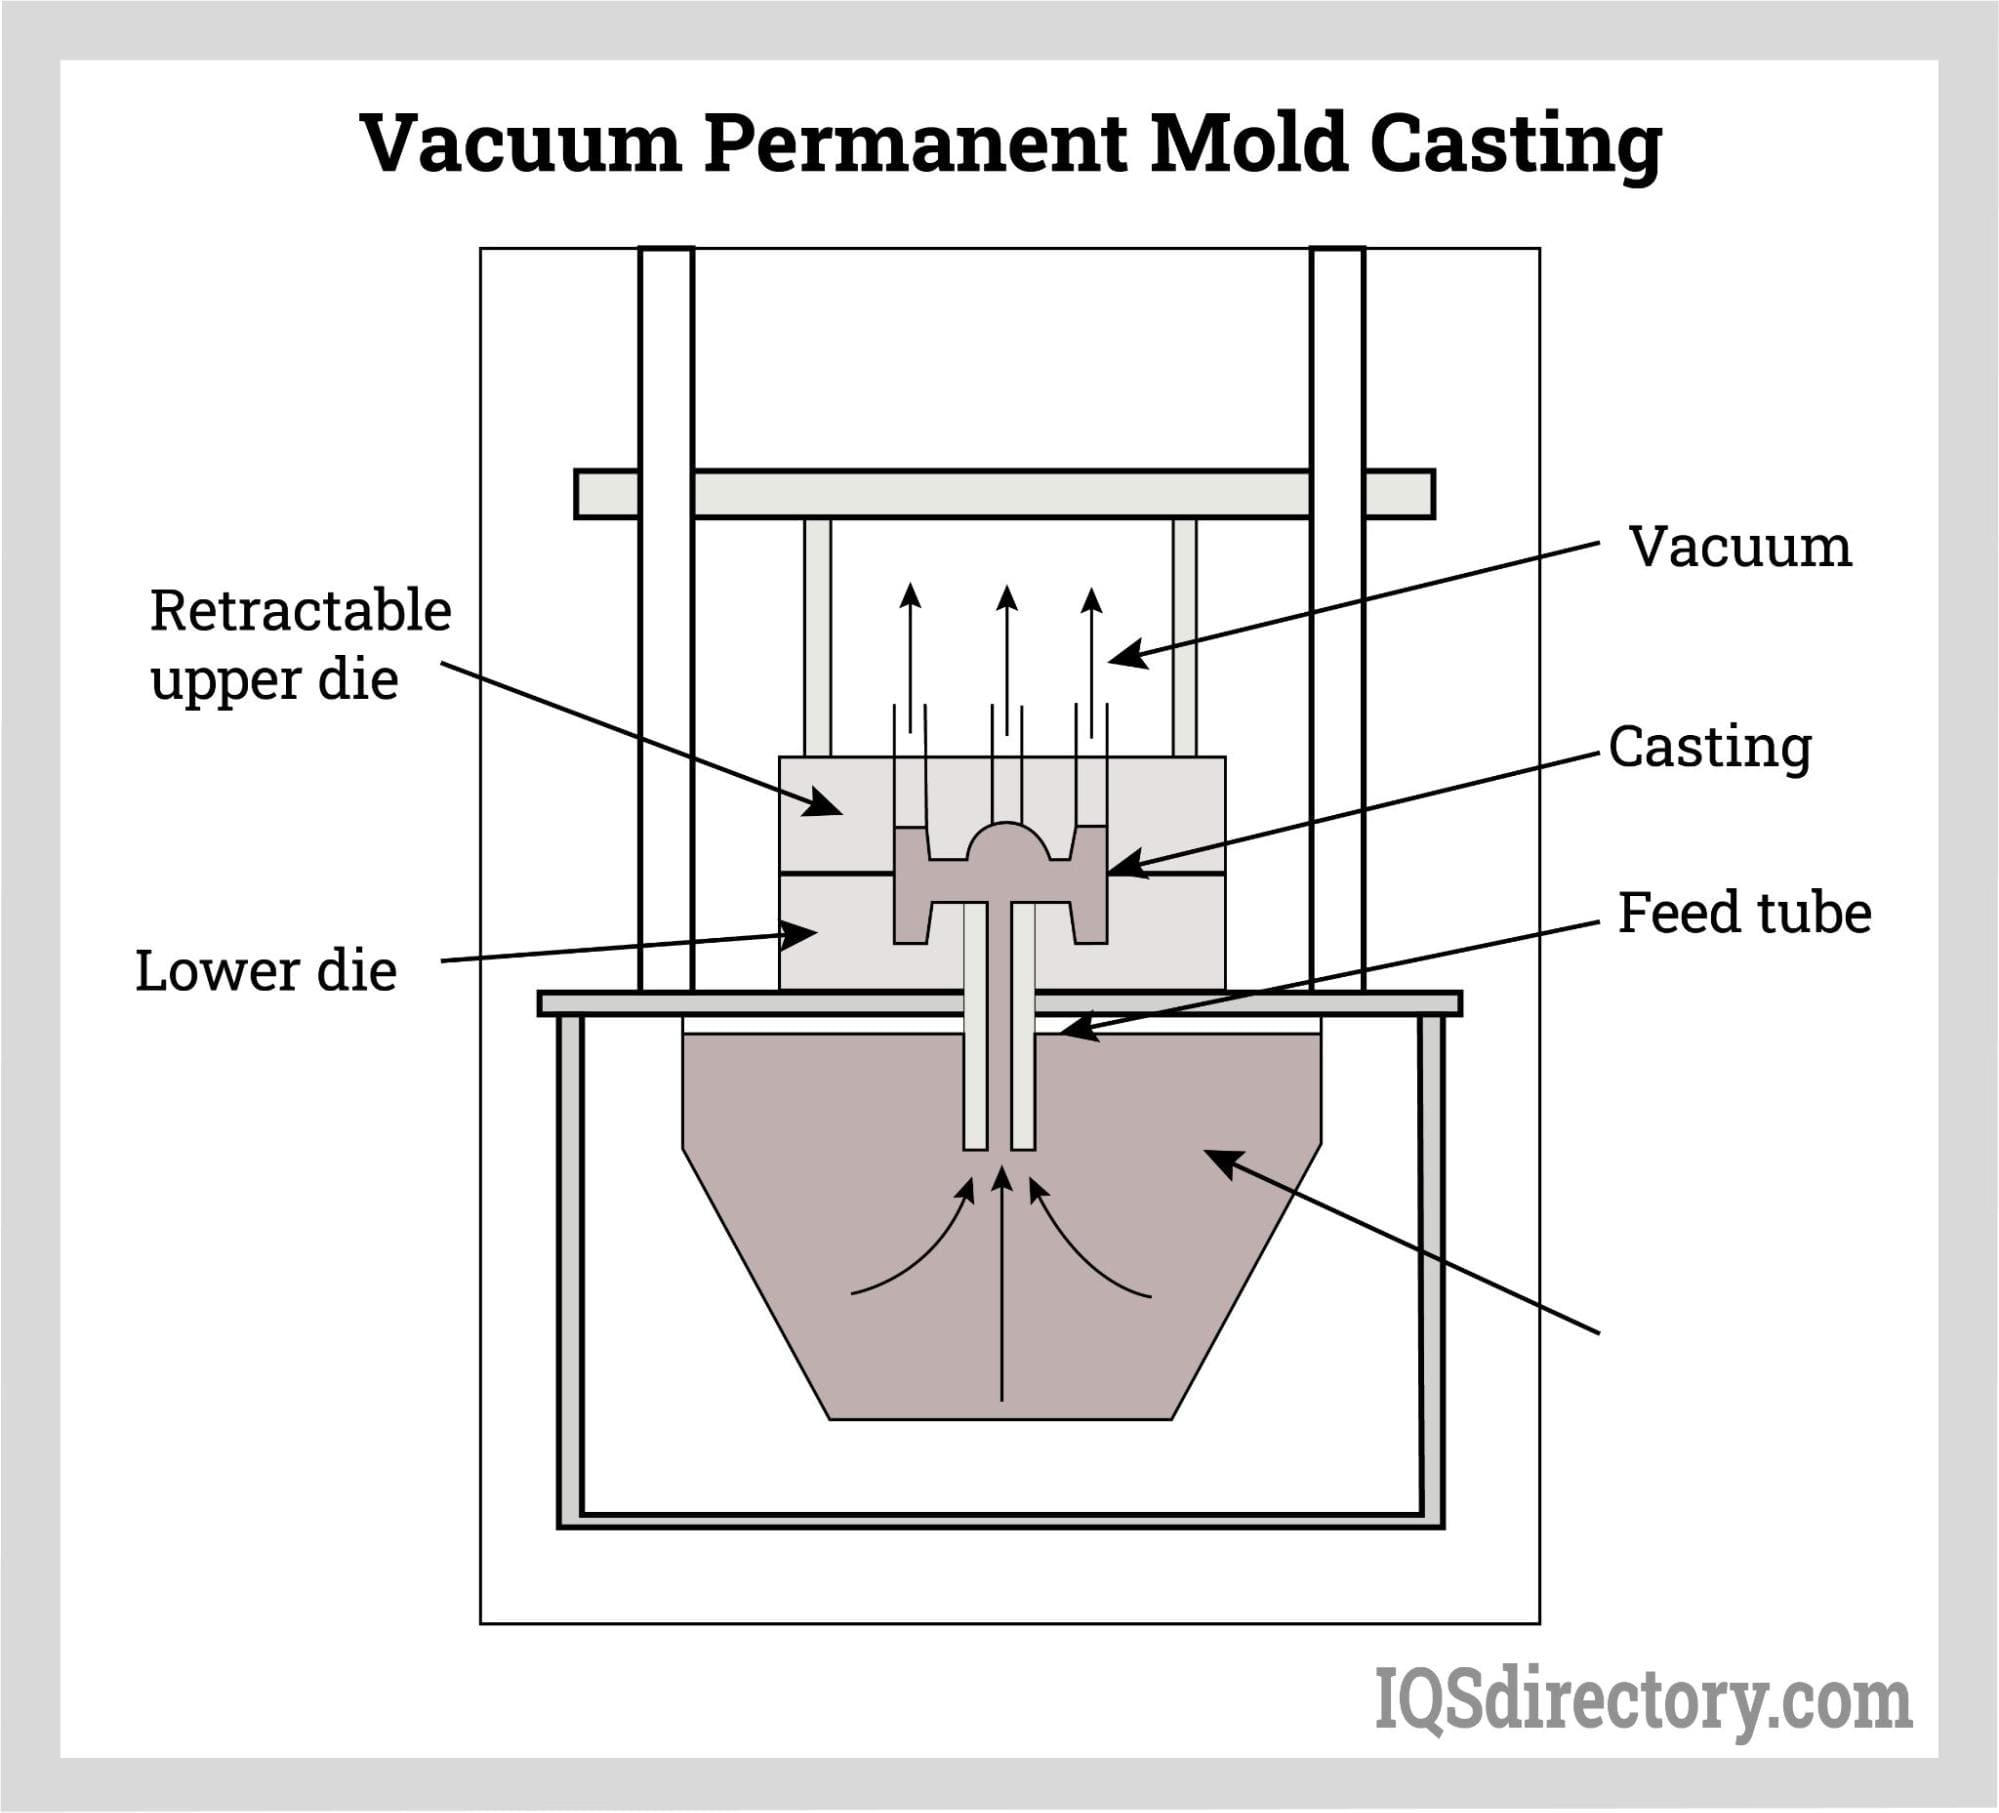 Vacuum Permanent Mold Casting